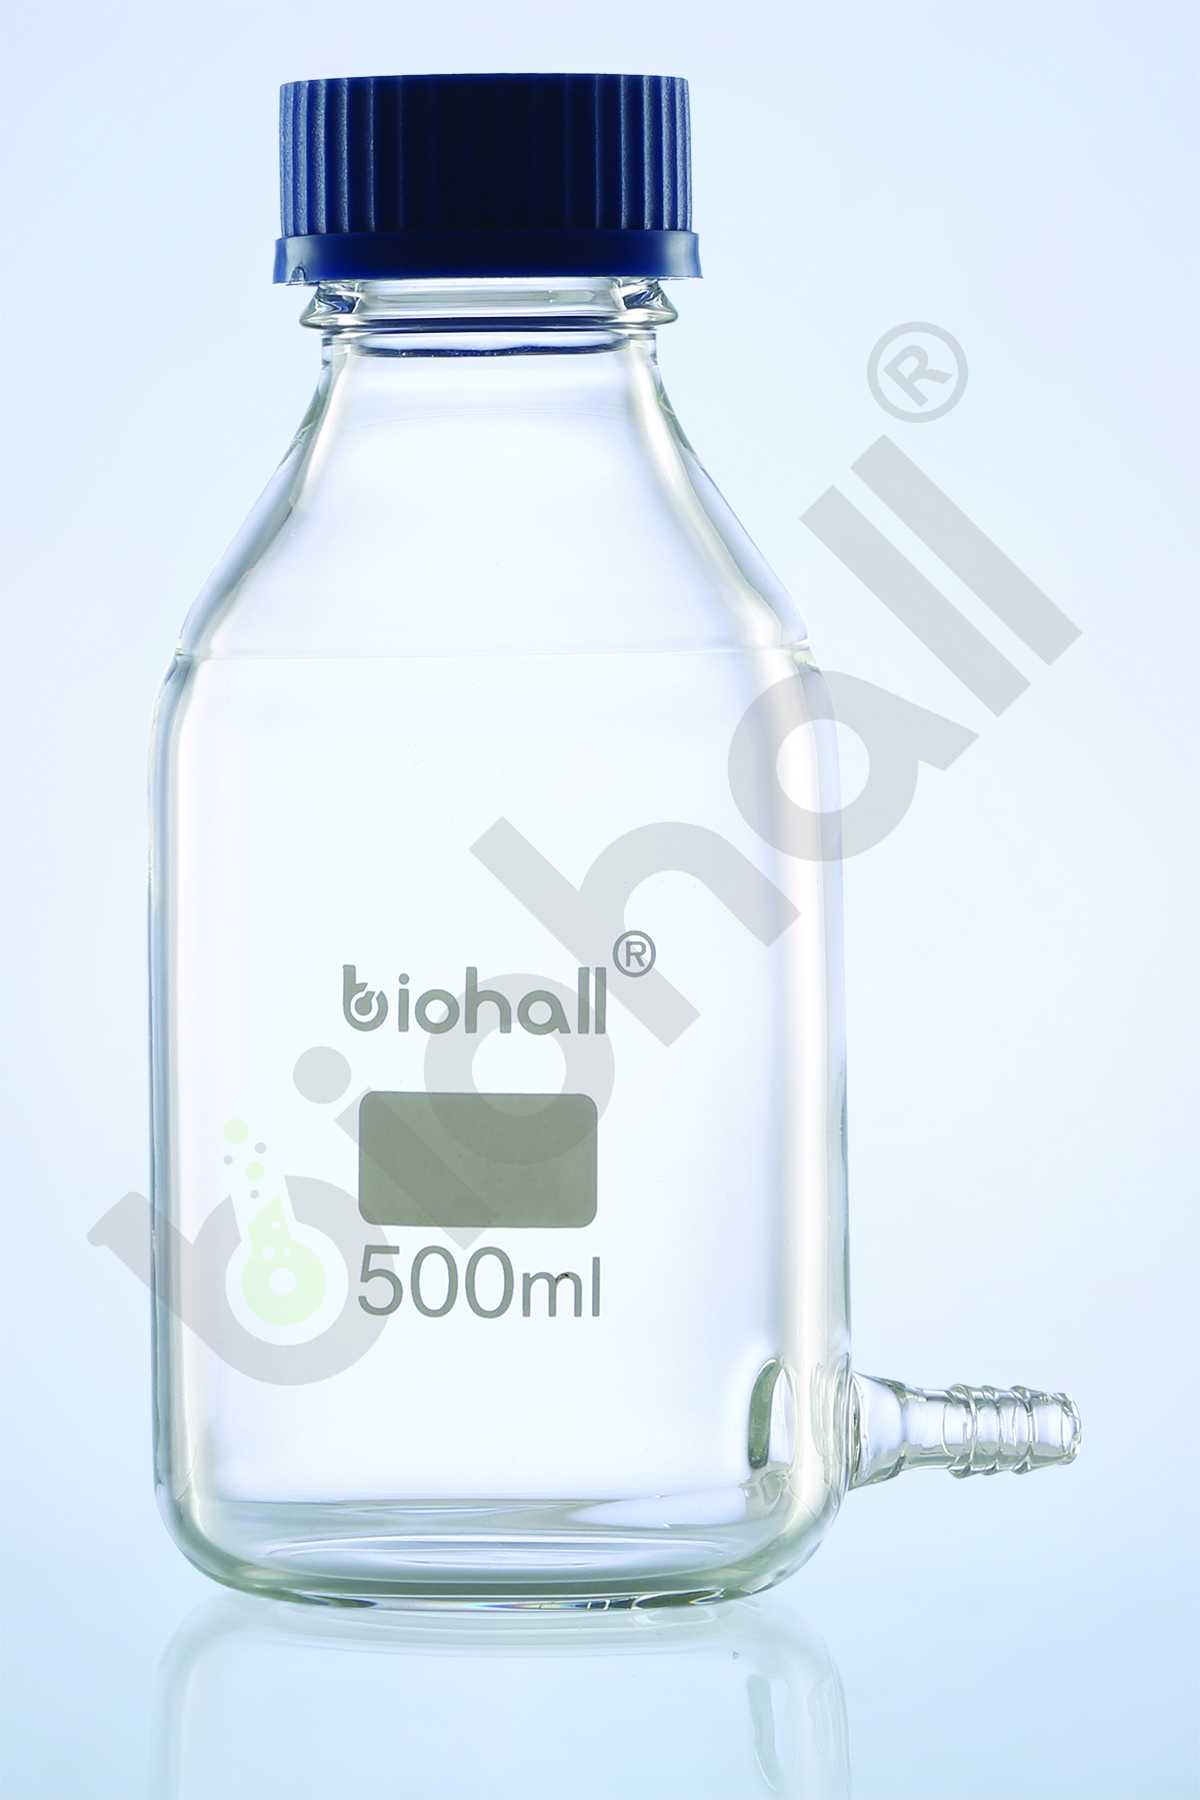 Aspirator Bottle